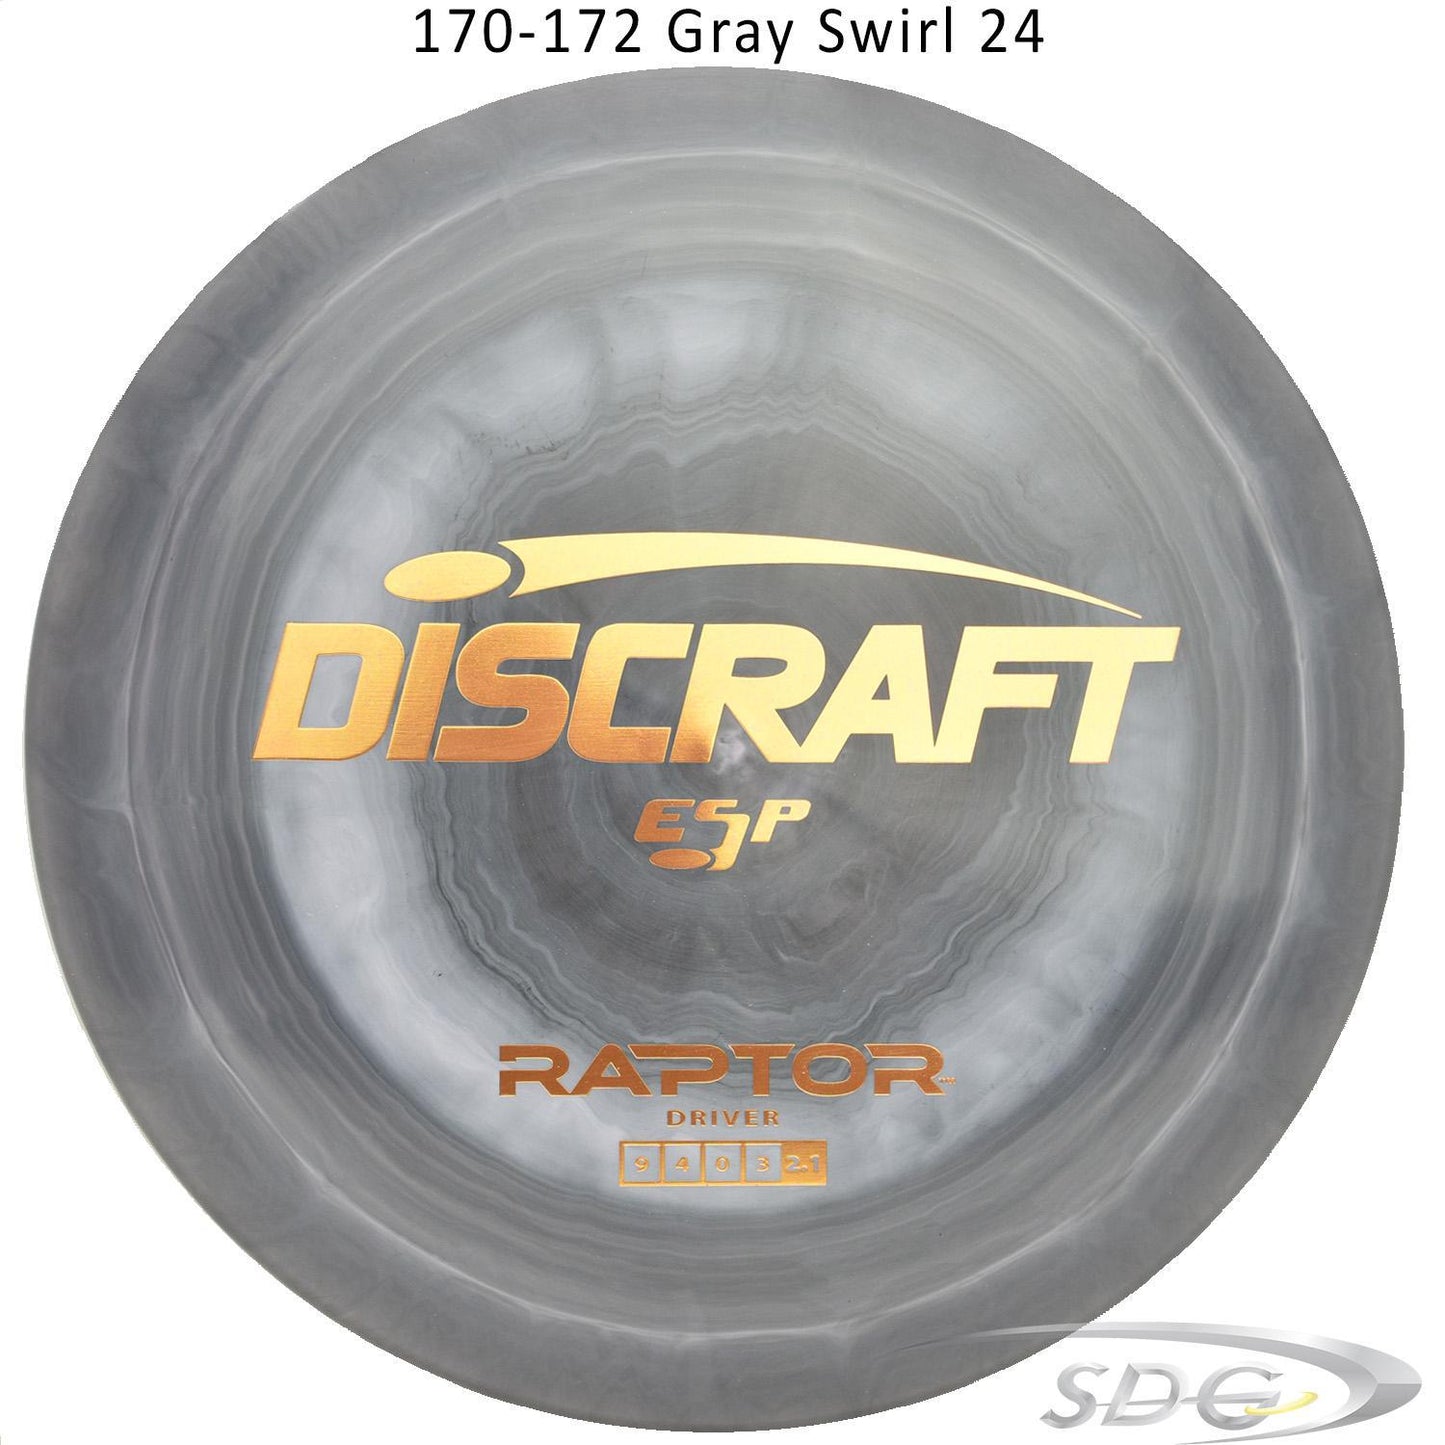 discraft-esp-raptor-disc-golf-distance-driver 170-172 Gray Swirl 24 